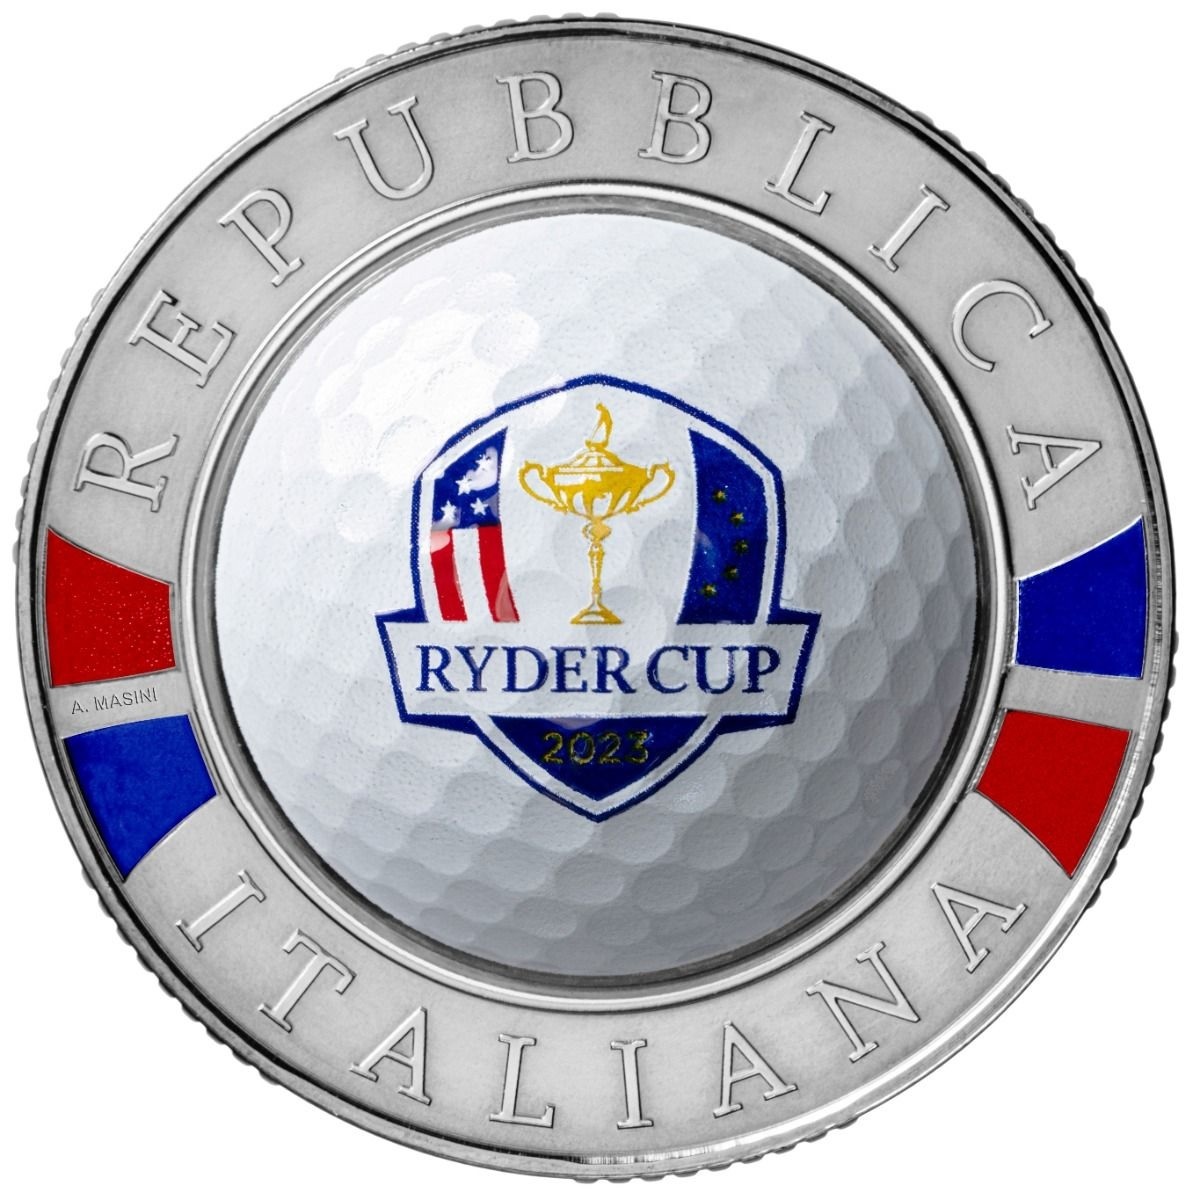 (EUR10.BU.2023.48-2ms10-23f009) 10 € Italy 2023 BU silver - Ryder Cup Obverse (zoom)